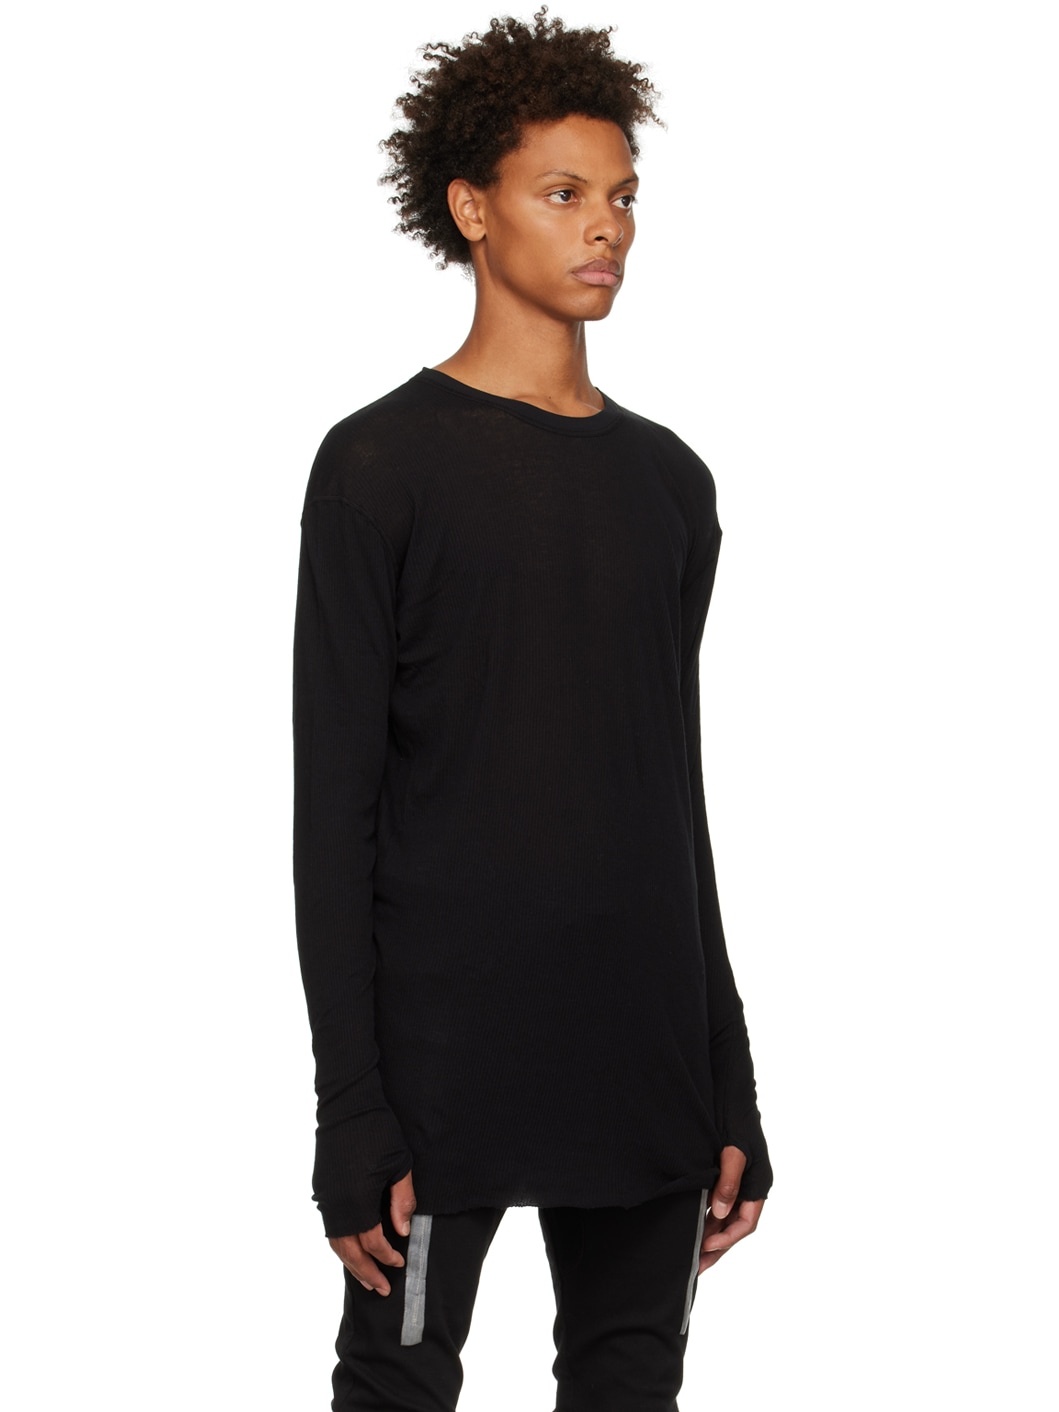 Black Object-Dyed Long Sleeve T-Shirt - 2